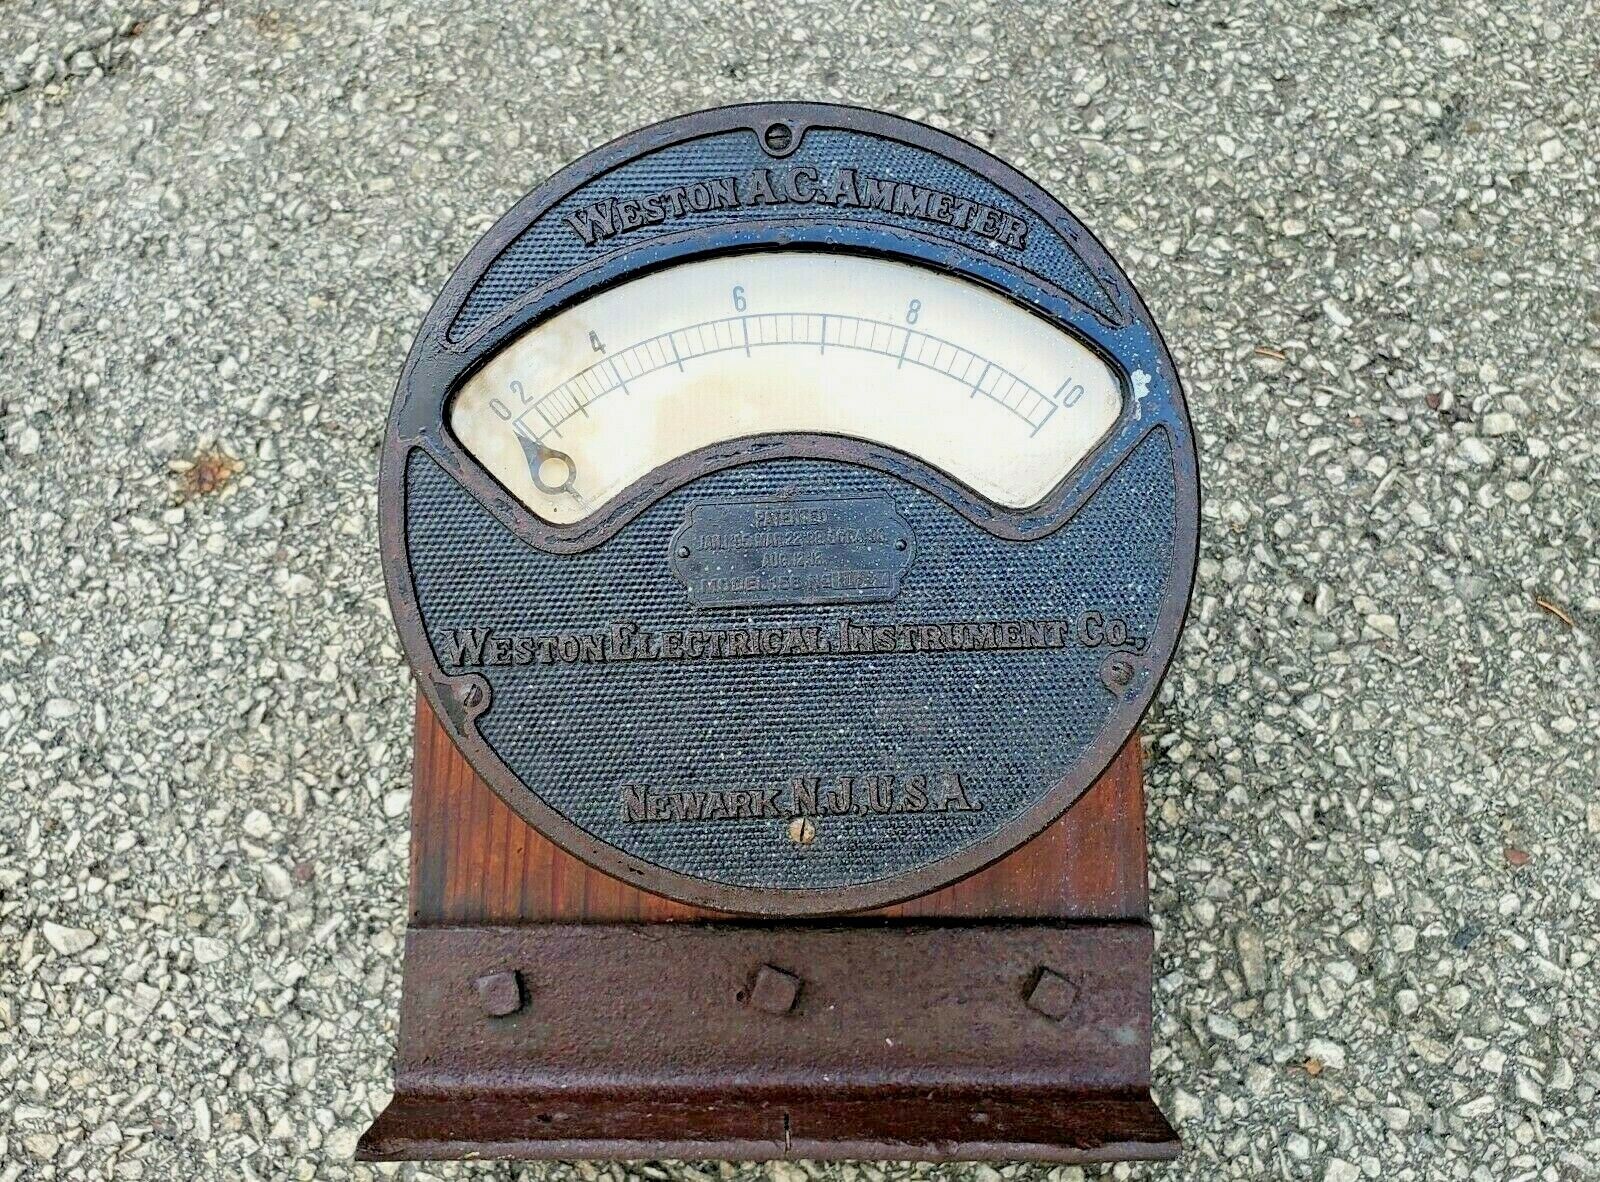 Weston Model 156 AC Ammeter Electrical Instrument Industrial Vintage Antique